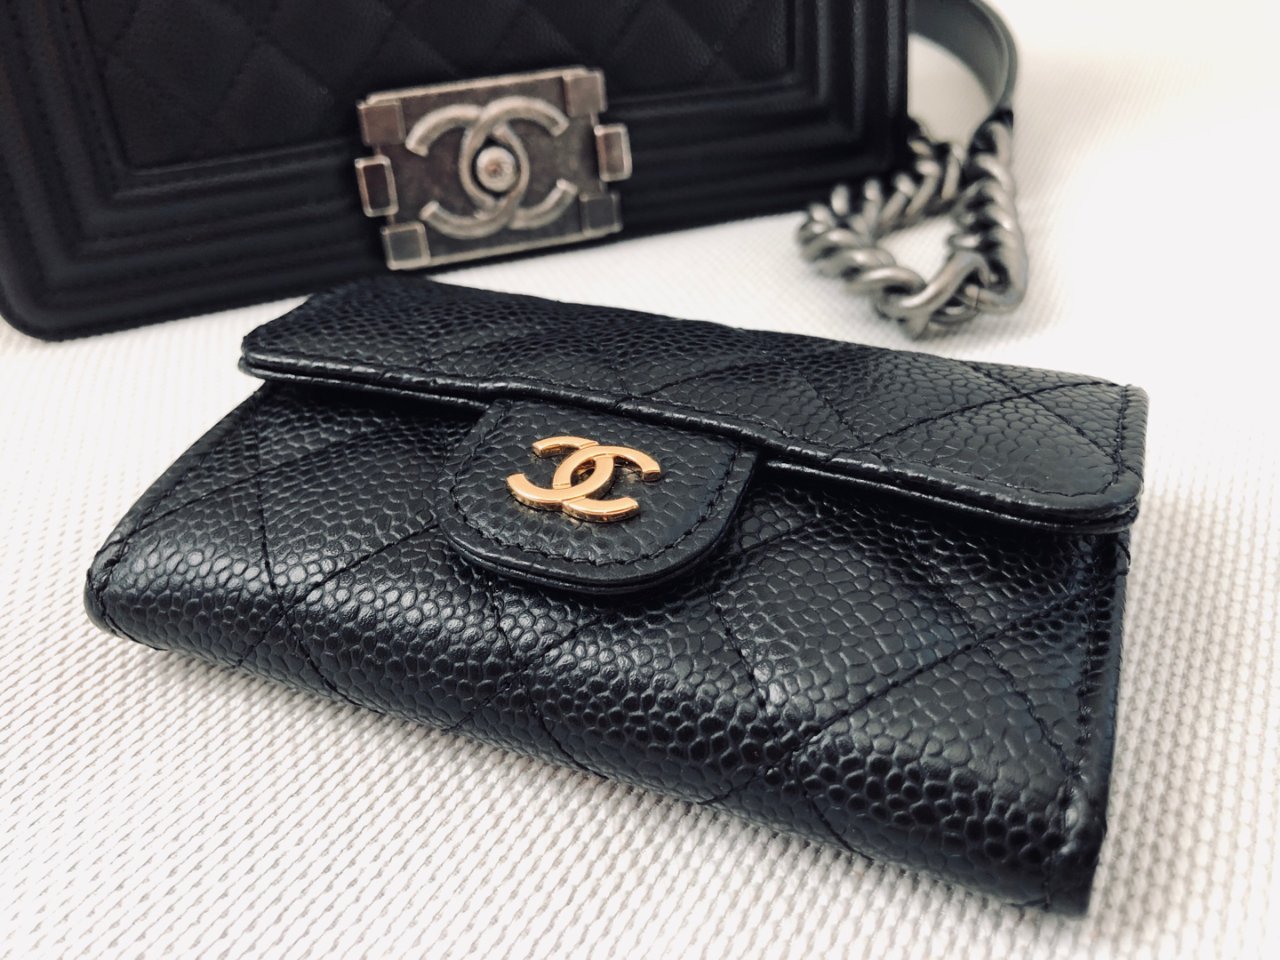 Chanel 香奈儿,我的Chanel包,Chanel卡包